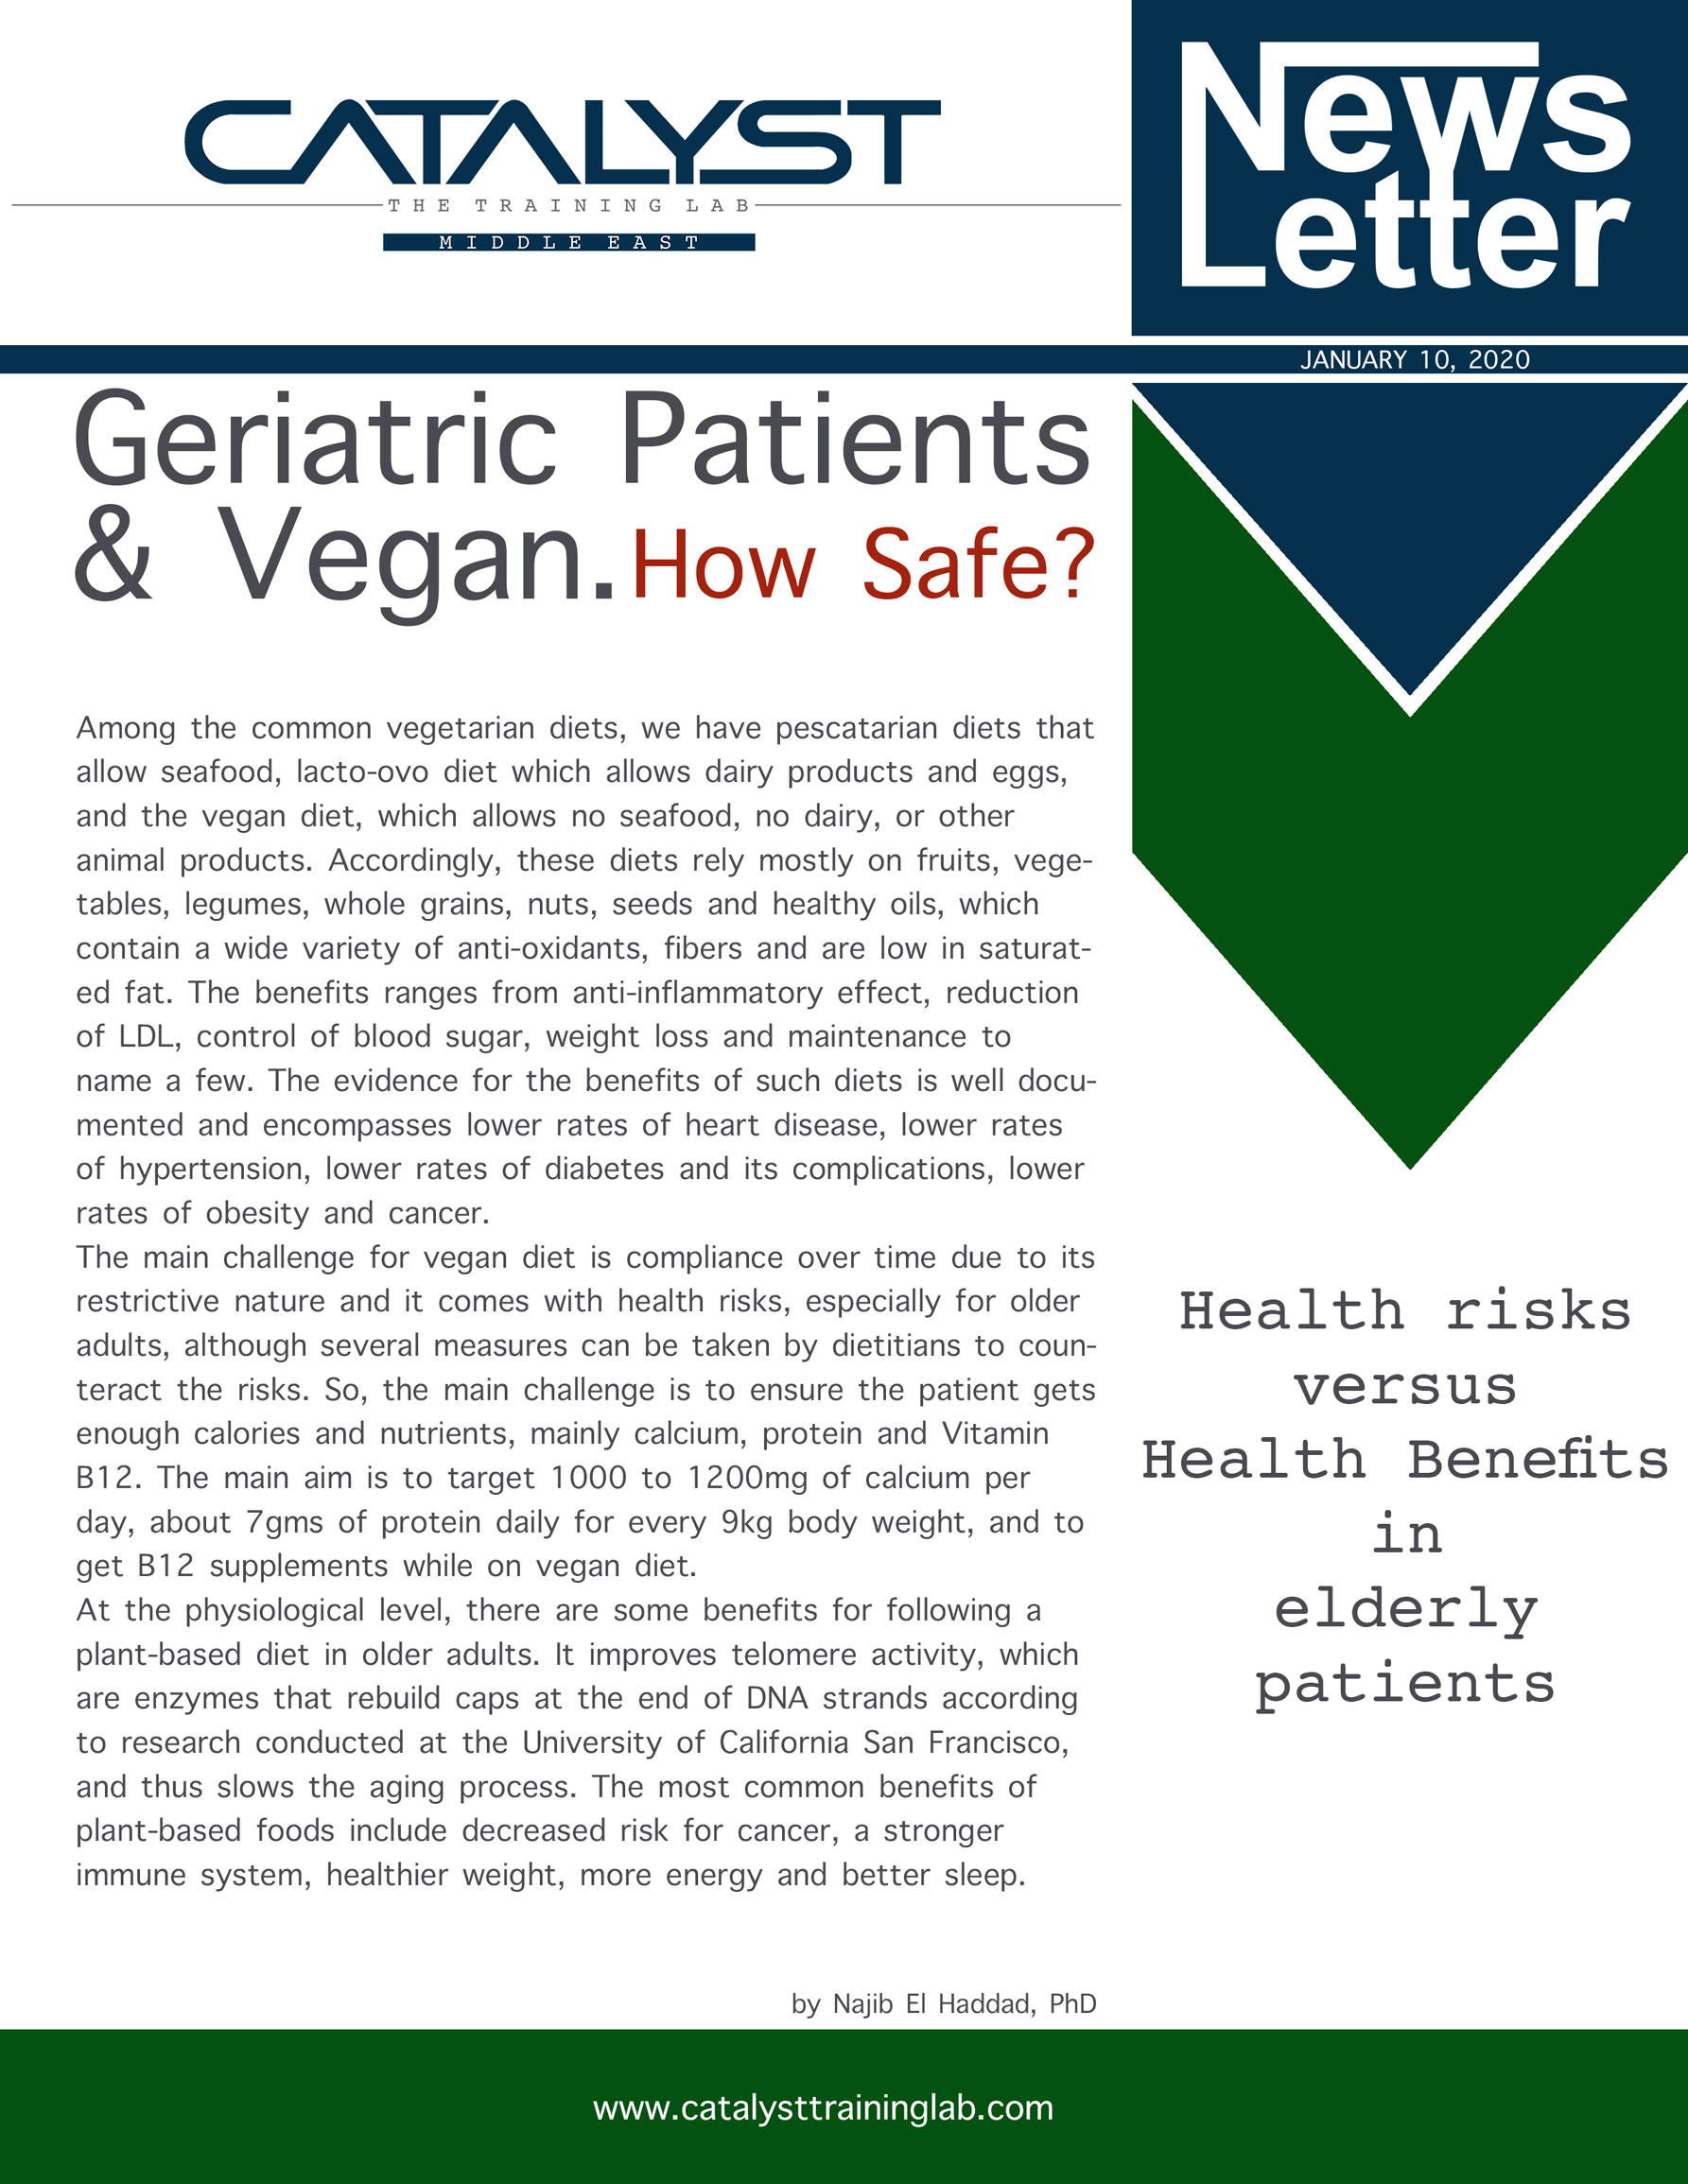 Geriatric Patients & Vegan. How Safe?